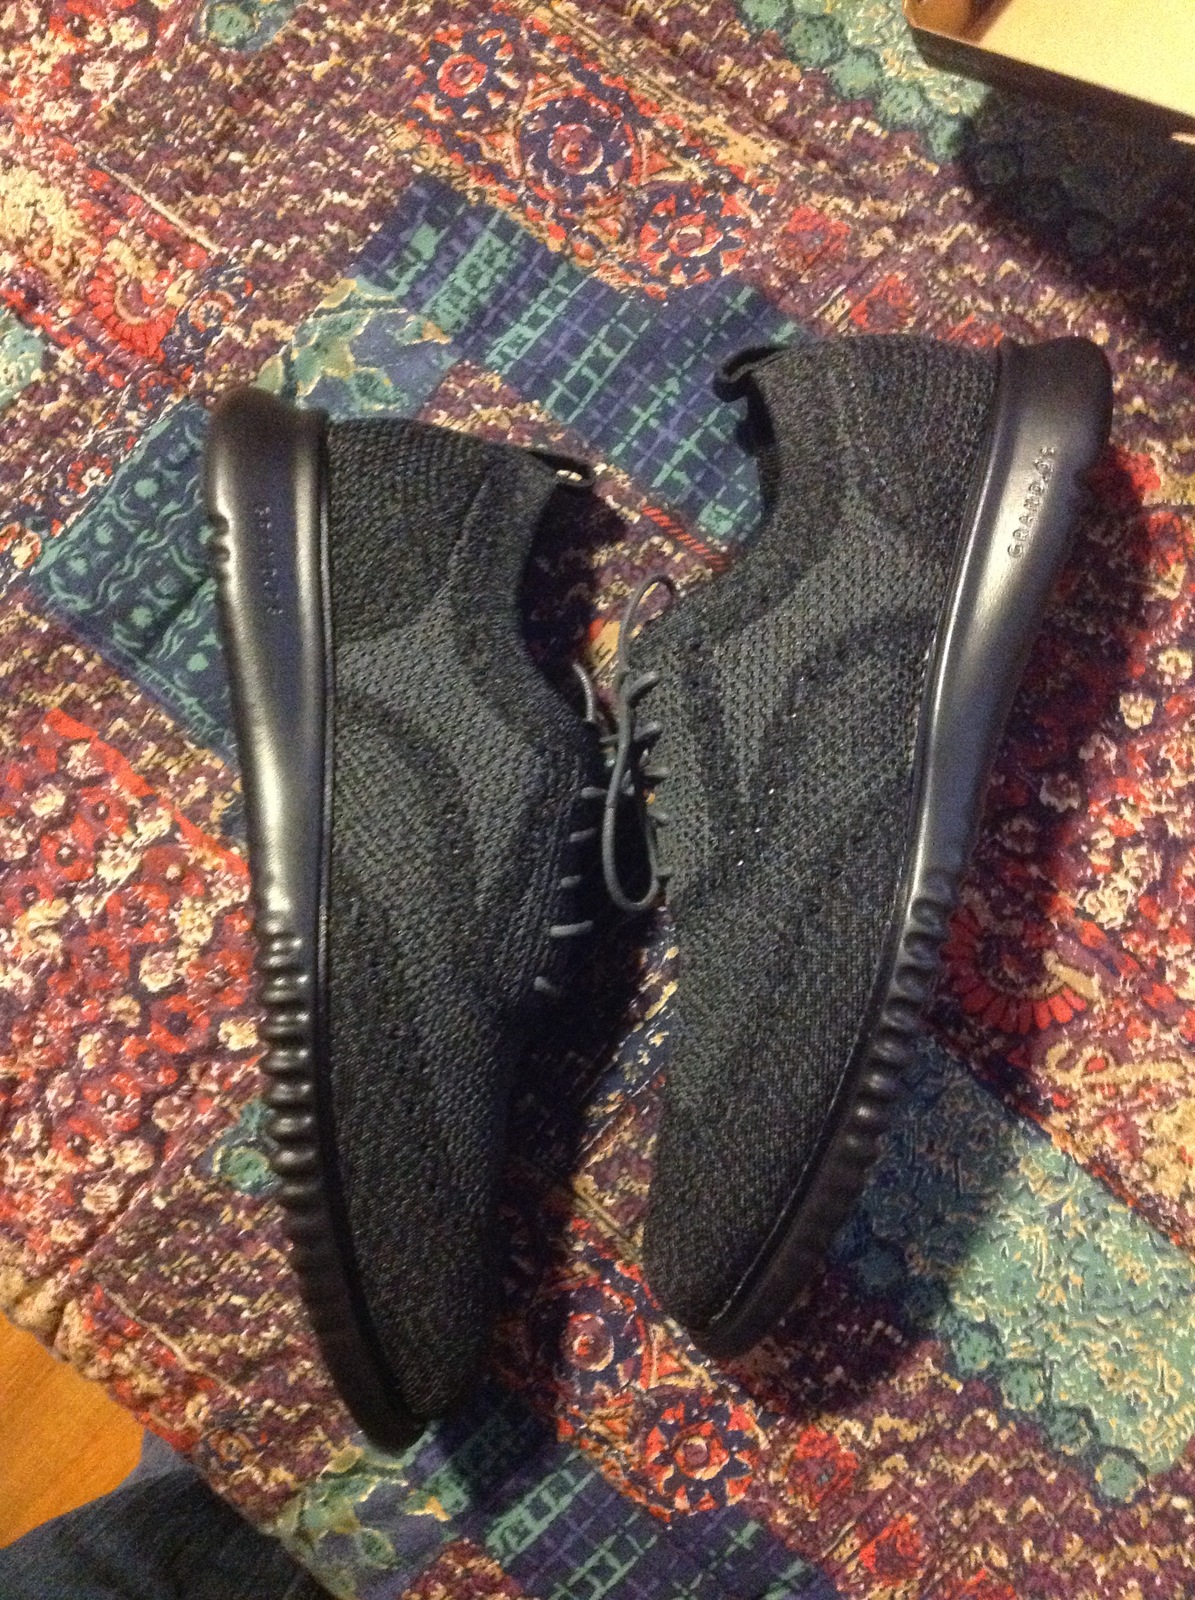 Cole Haan Men's 2.Zerogrand Black Stitchlite Oxford Shoes - 11.5M- New in Box - $170.00